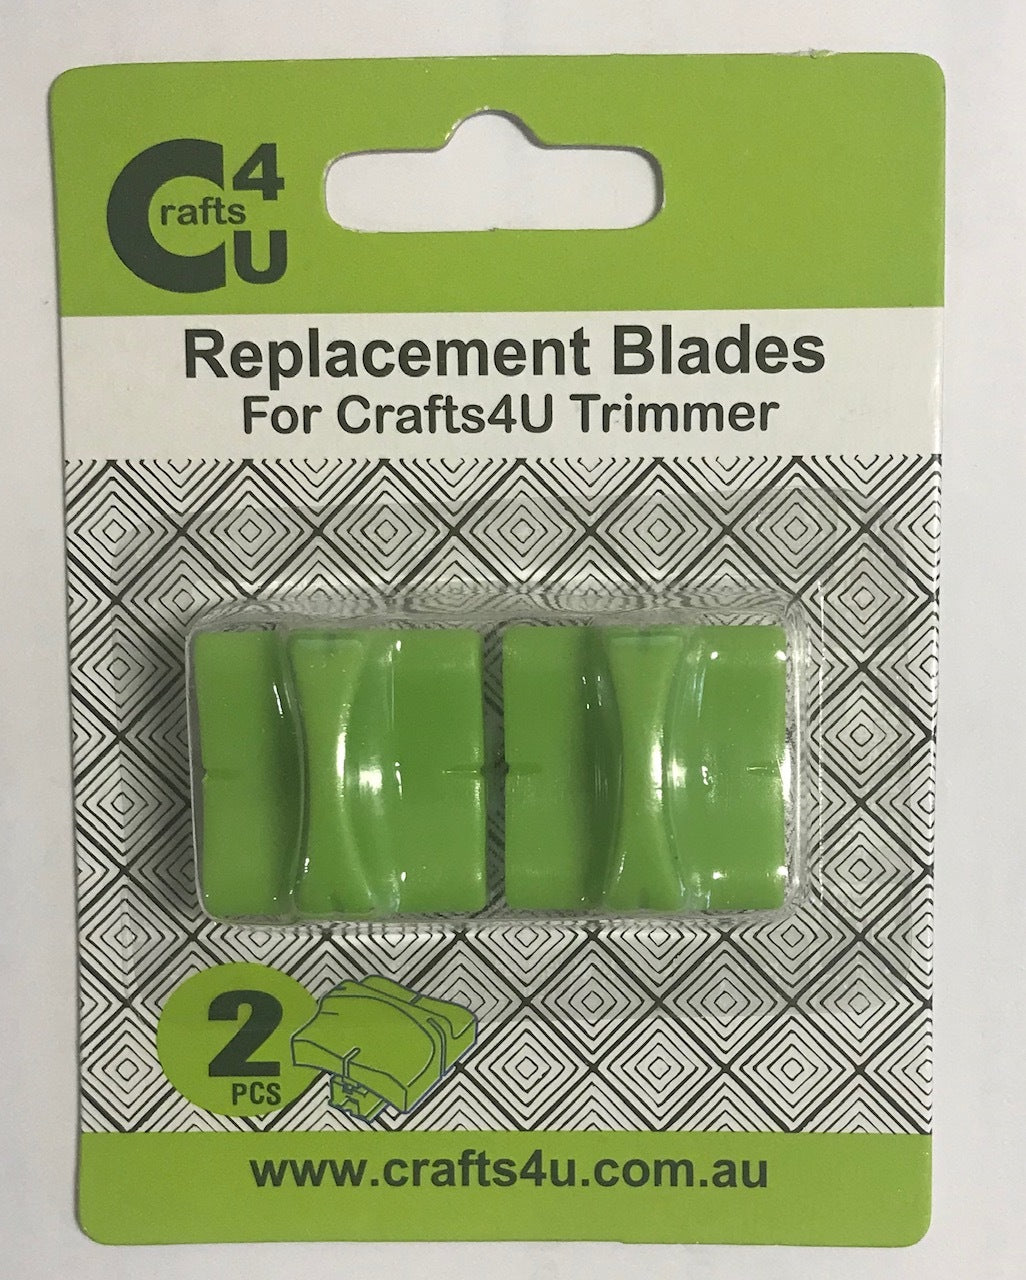 Crafts 4U Trimmer Replacement Blades